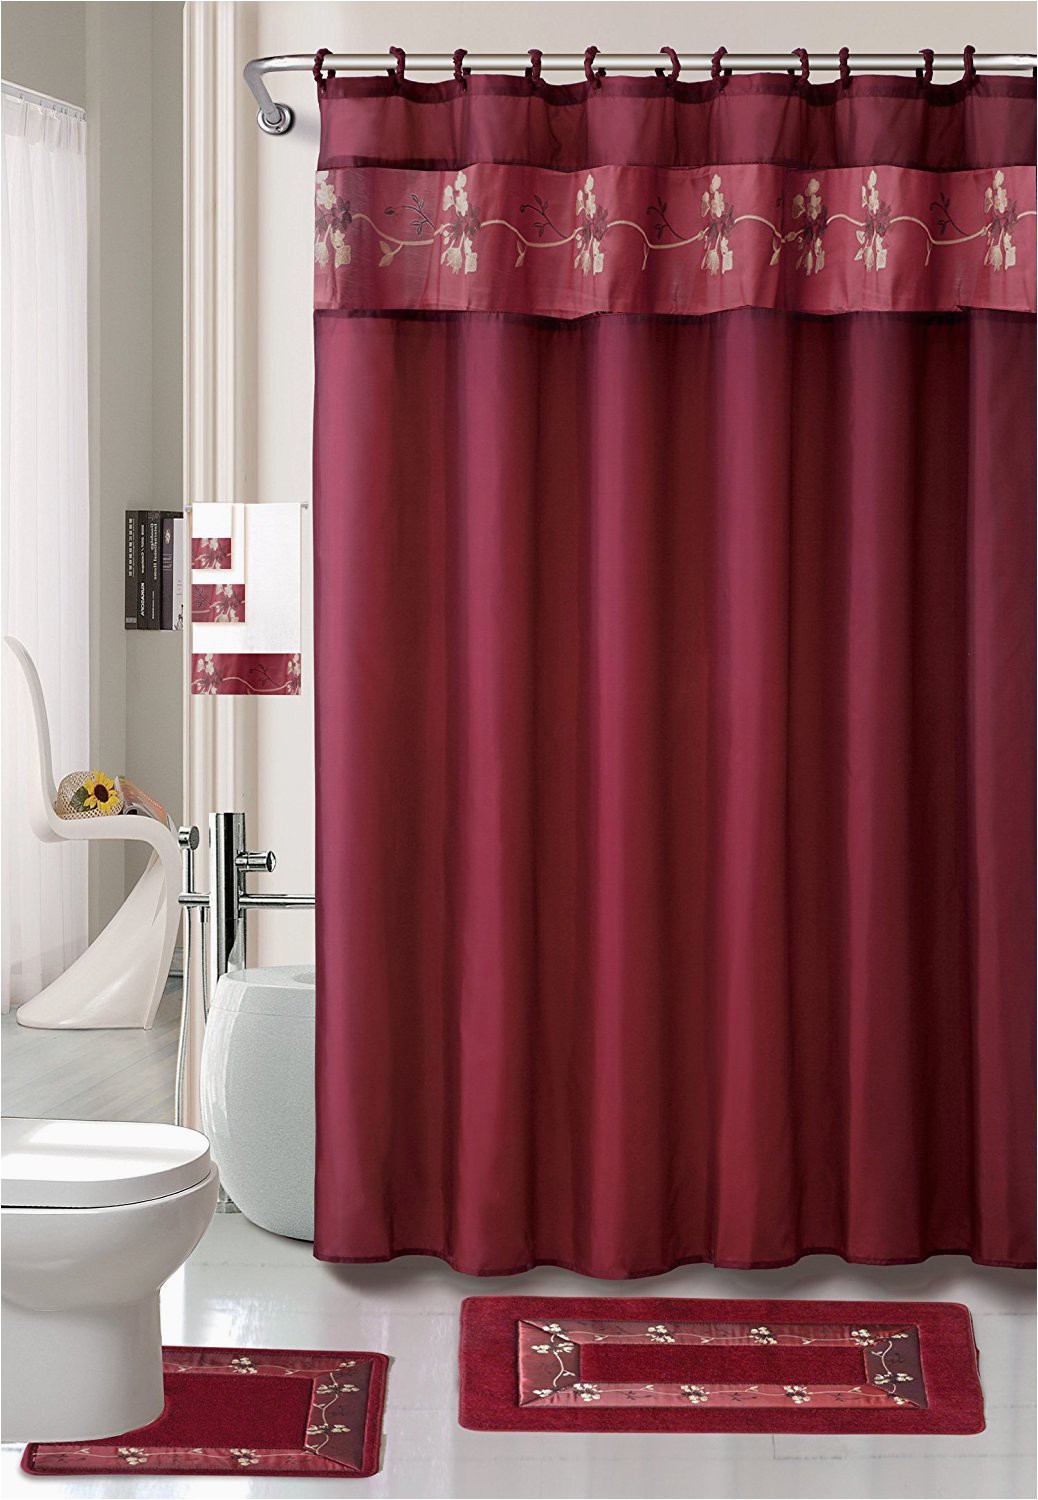 Walmart Red Bath Rugs 22 Piece Bath Accessory Set Burgundy Red Bath Rug Set Shower Curtain & Accessories